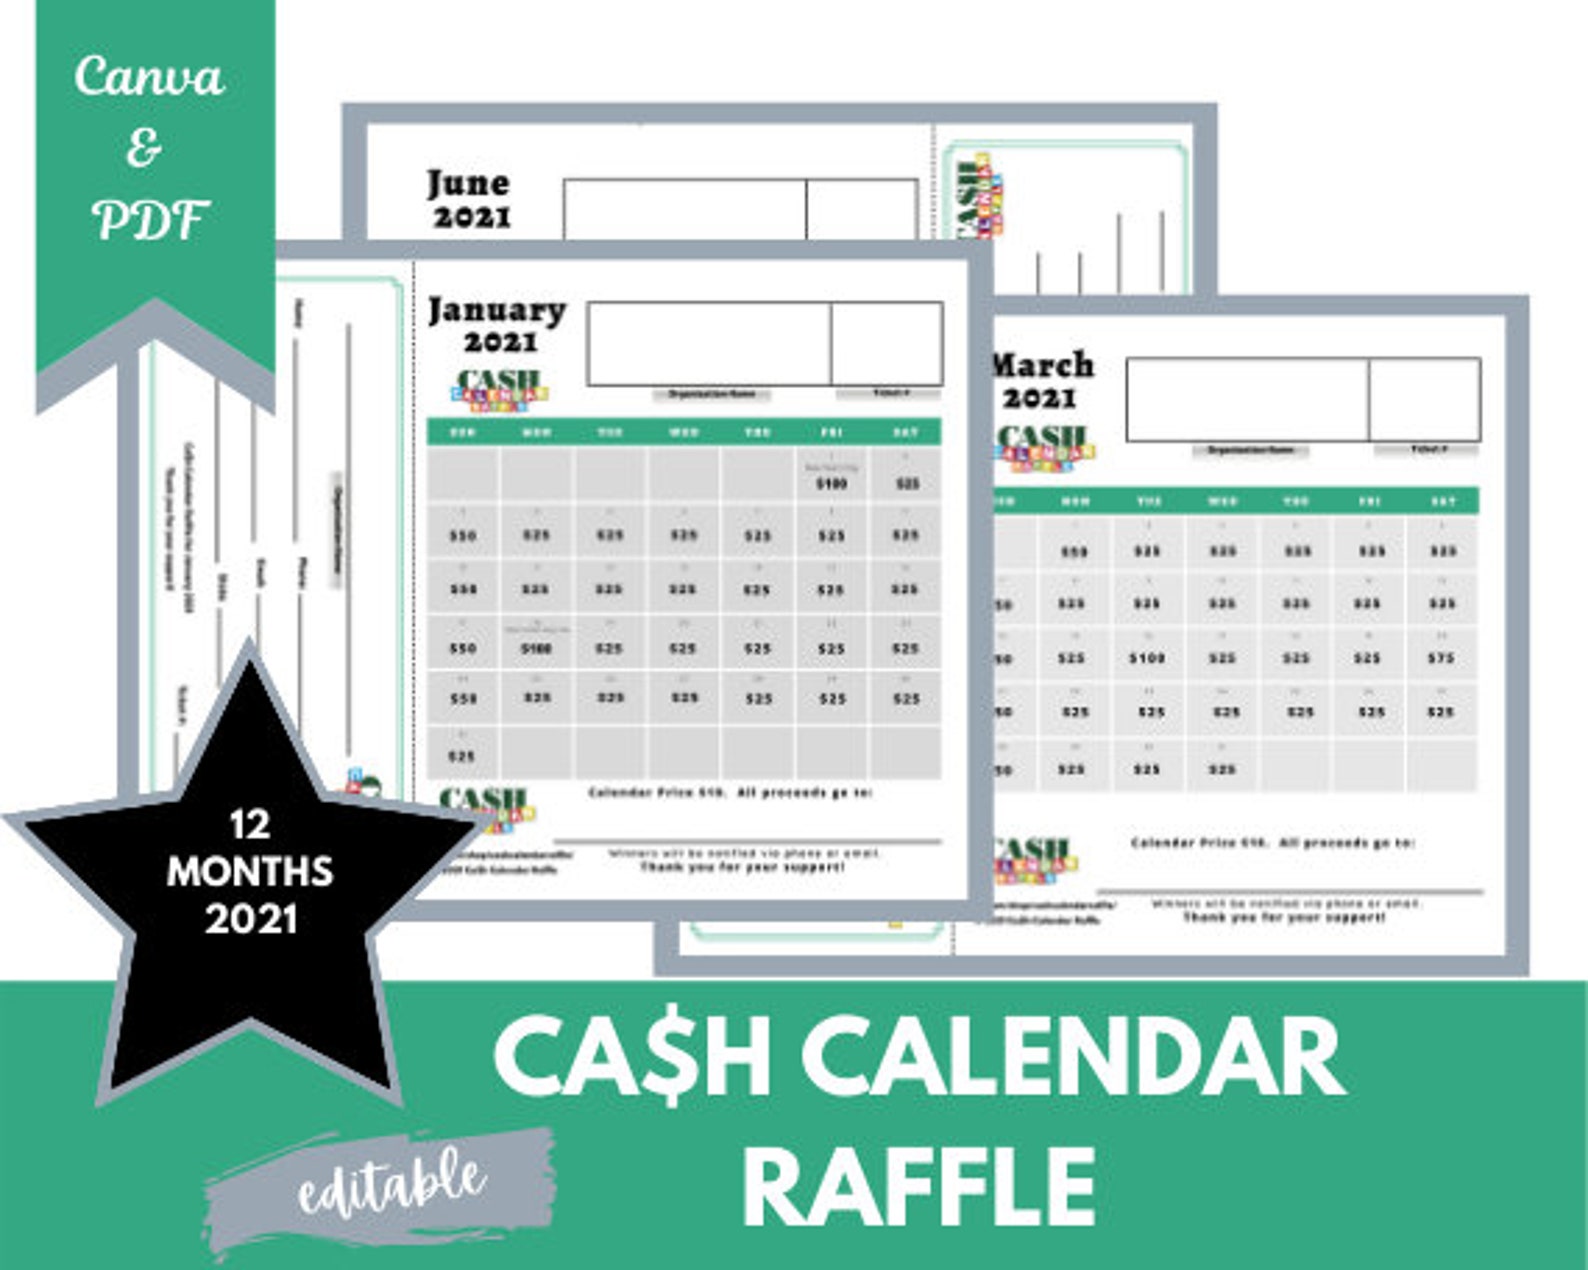 Cash Calendar Raffle Template 2021 Editable CANVA Template Etsy